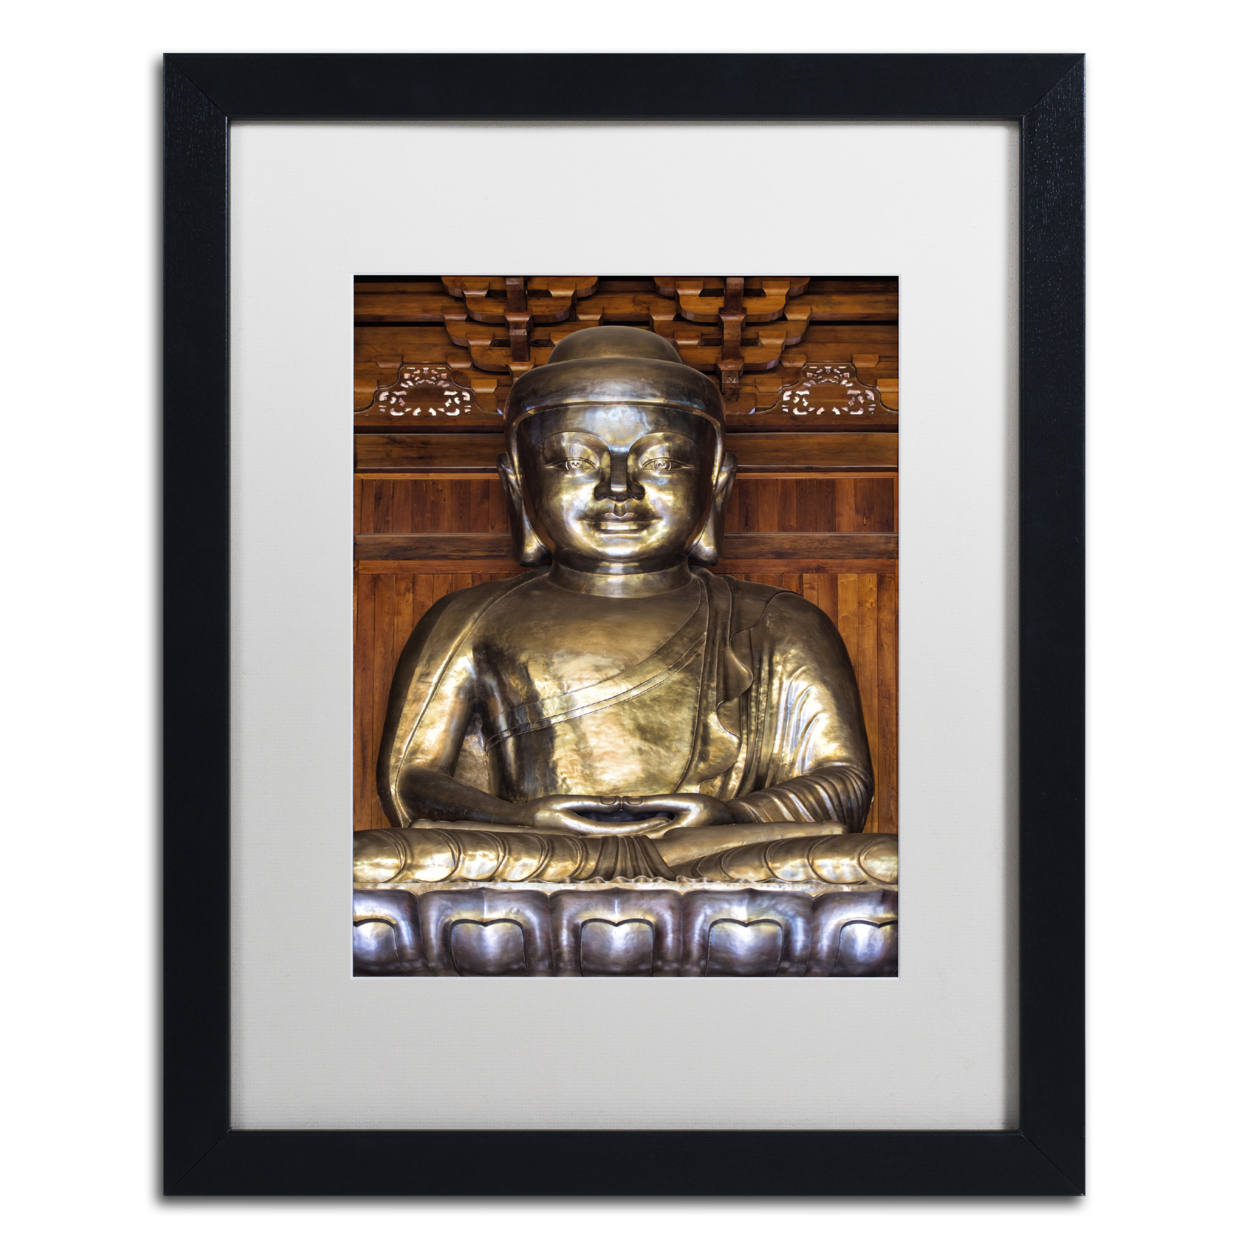 Philippe Hugonnard 'Buddha' Black Wooden Framed Art 18 X 22 Inches